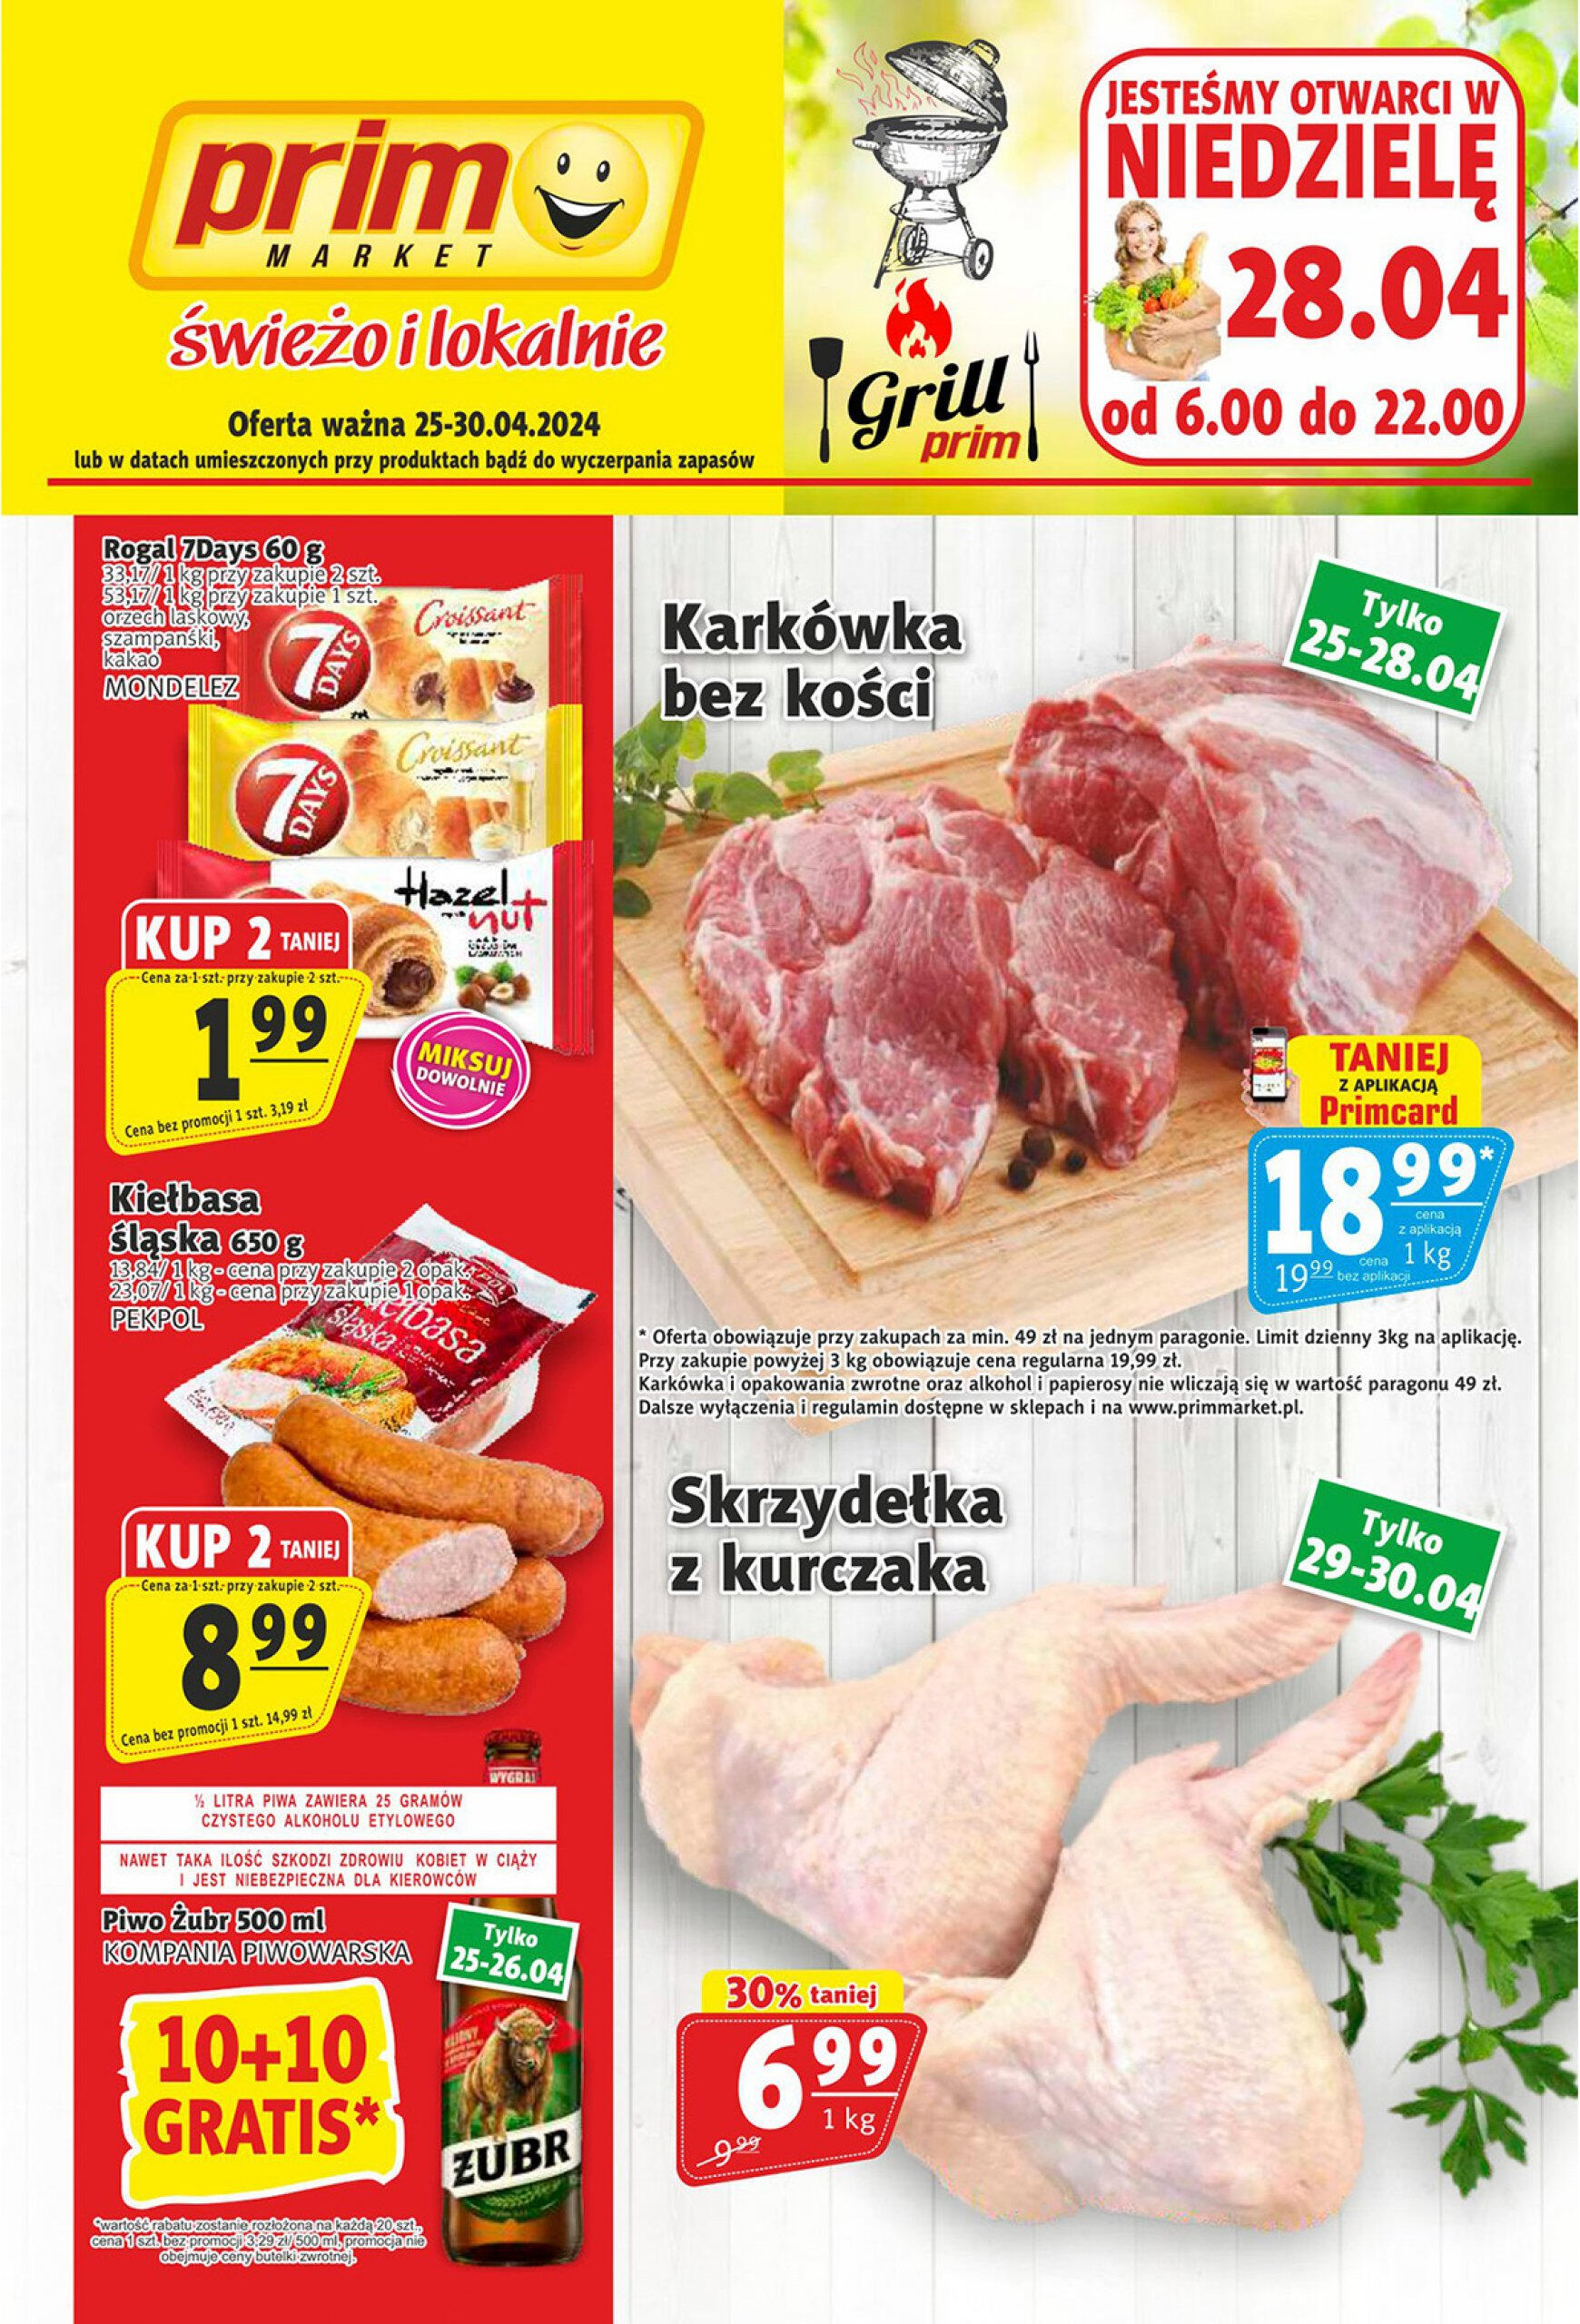 prim-market - Prim Market gazetka aktualna ważna od 25.04. - 30.04.